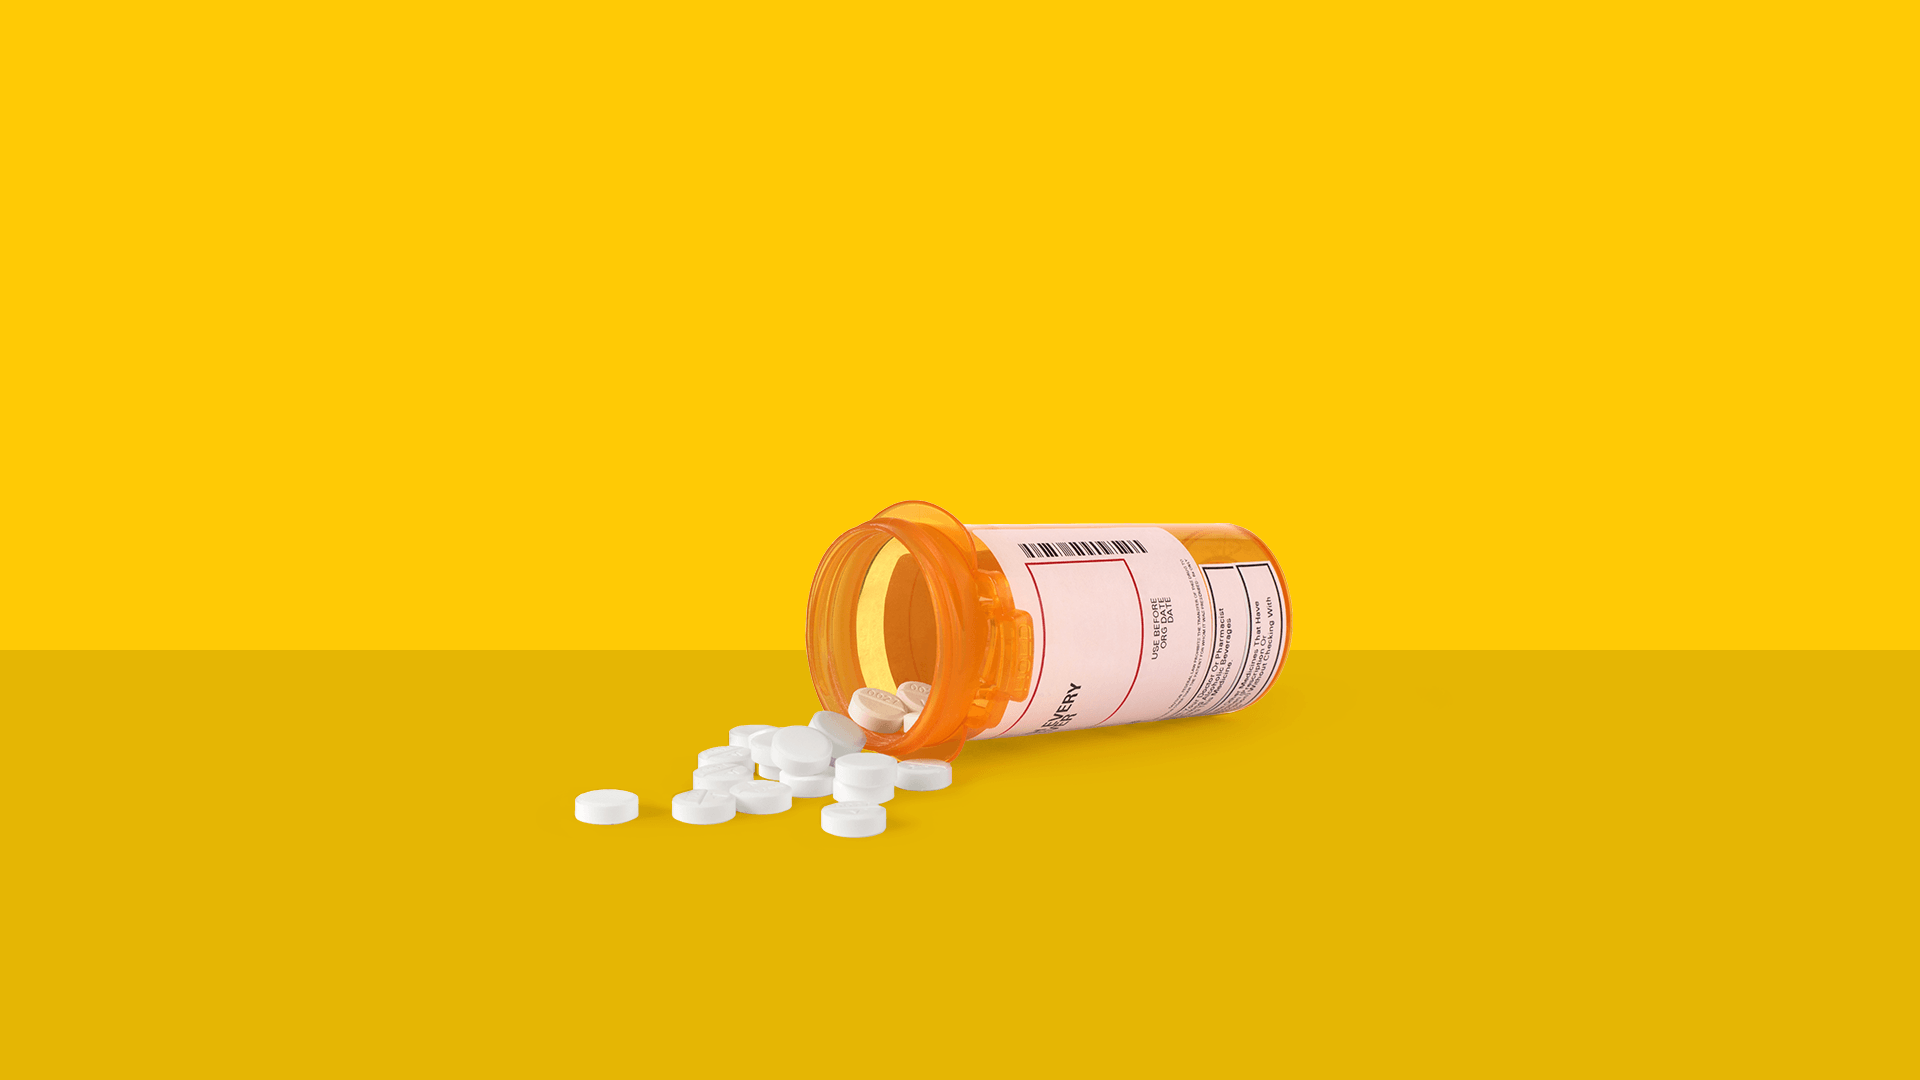 Spilled prescription bottle of pills: Dexilant side effects